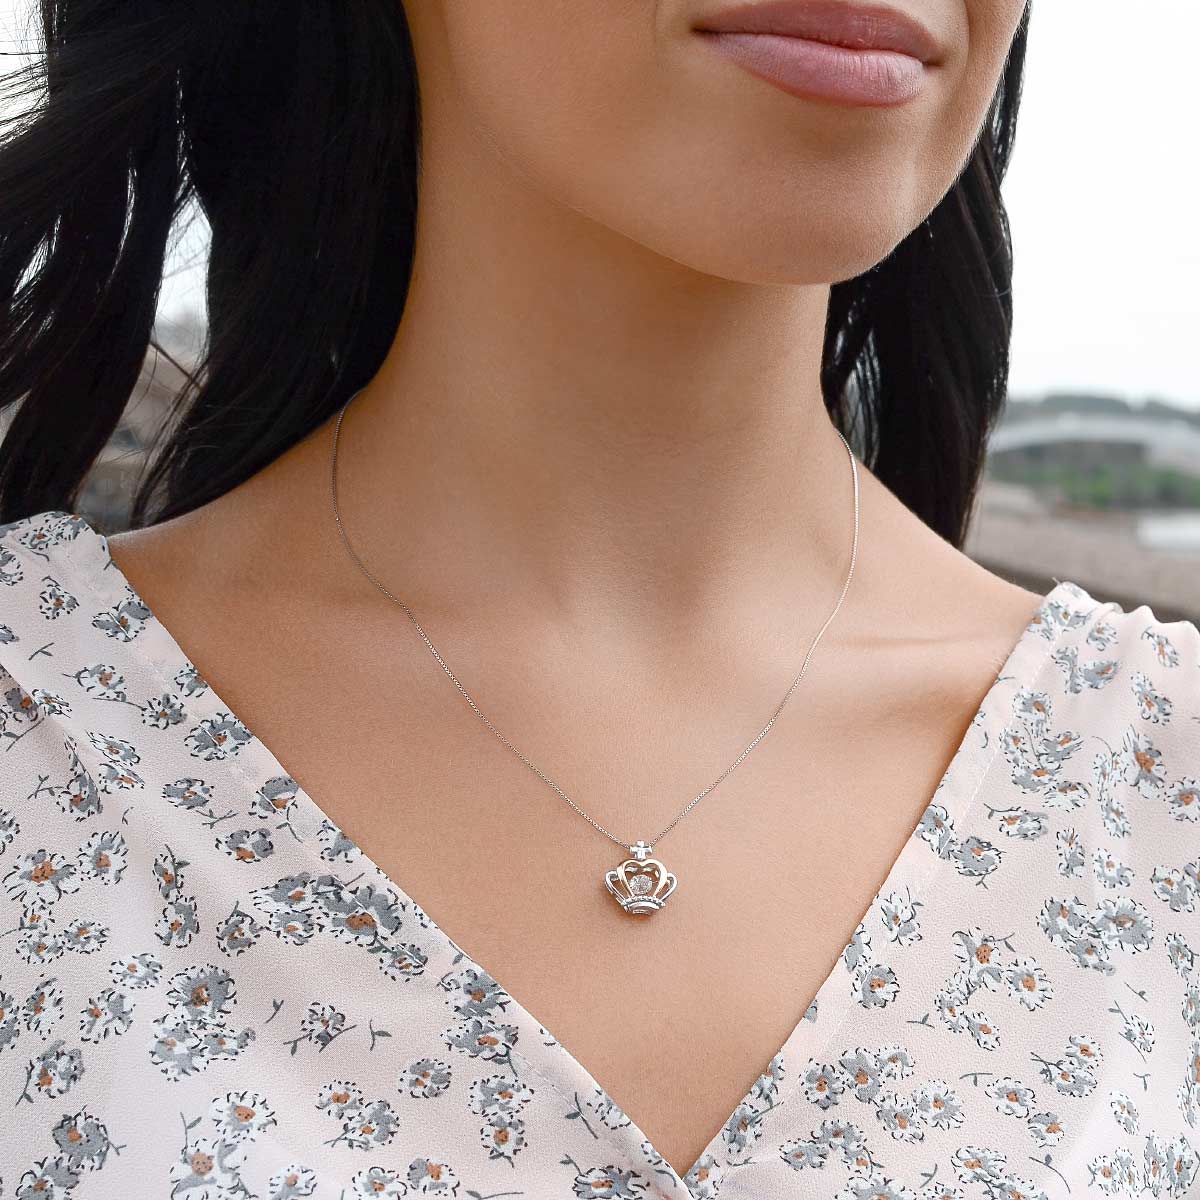 When Life Seems Hard, Queen Elizabeth - Luxe Crown Necklace Gift Set